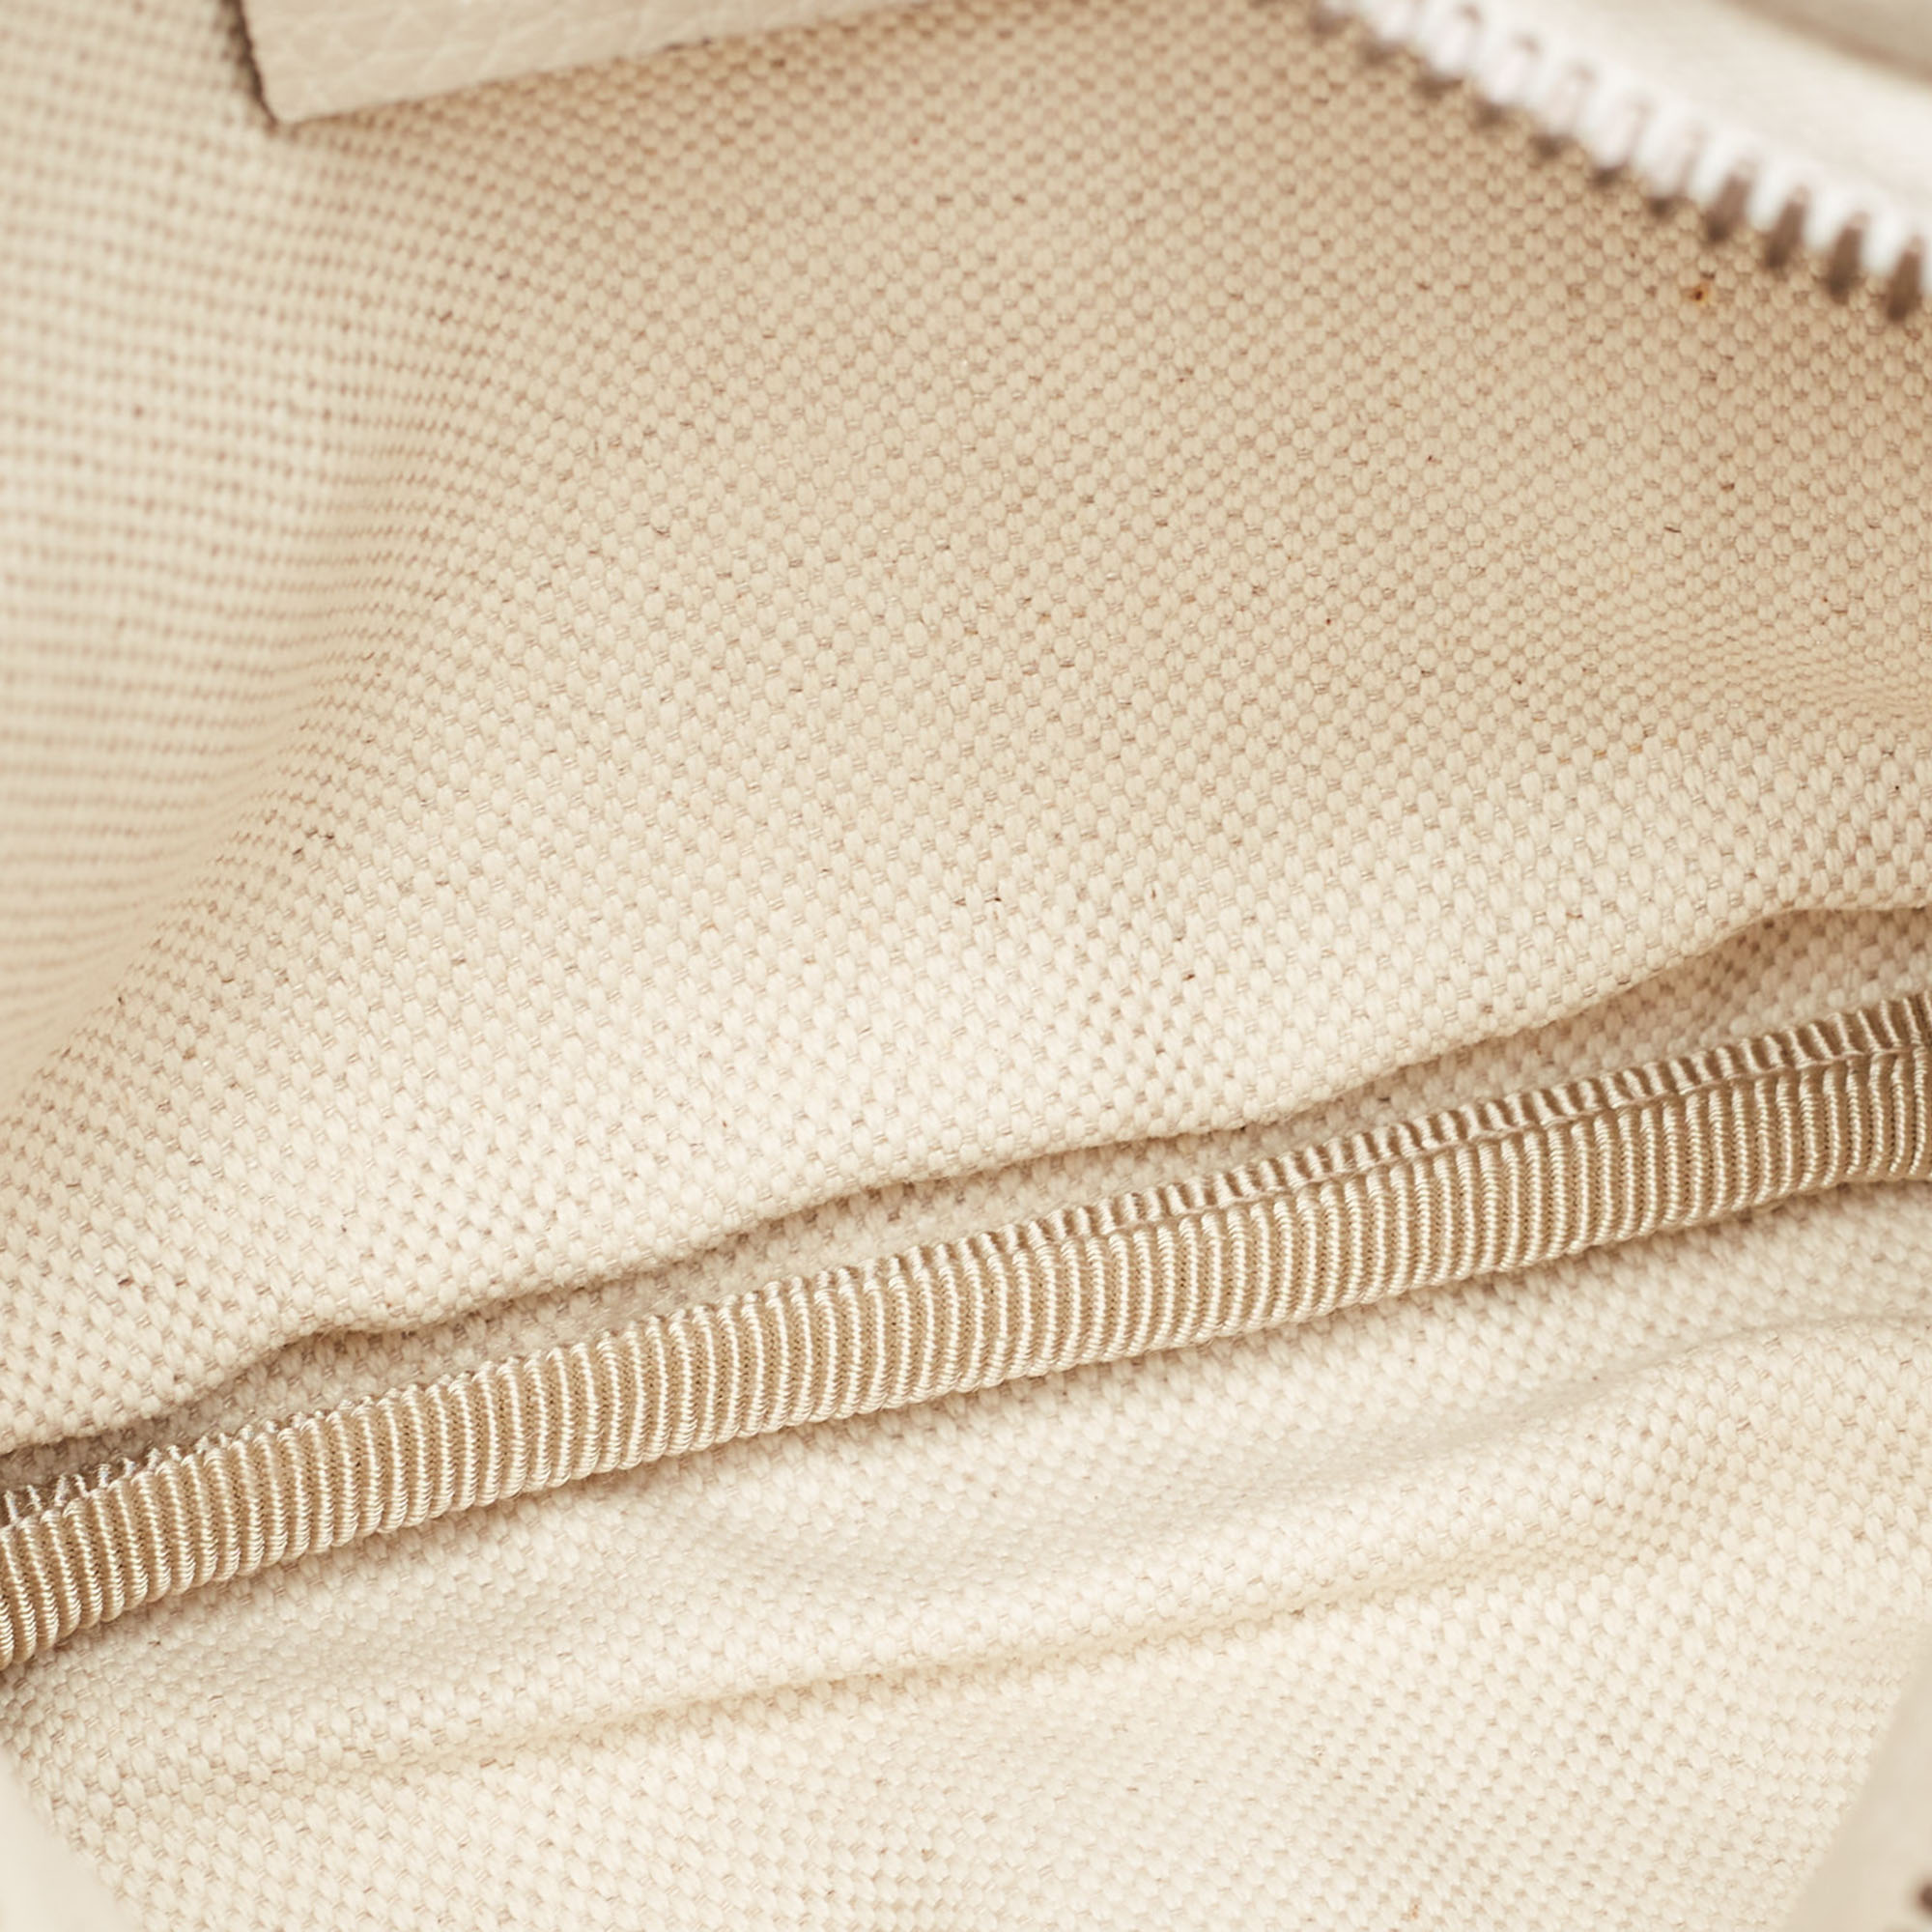 Gucci White Leather Logo Web Belt Bag